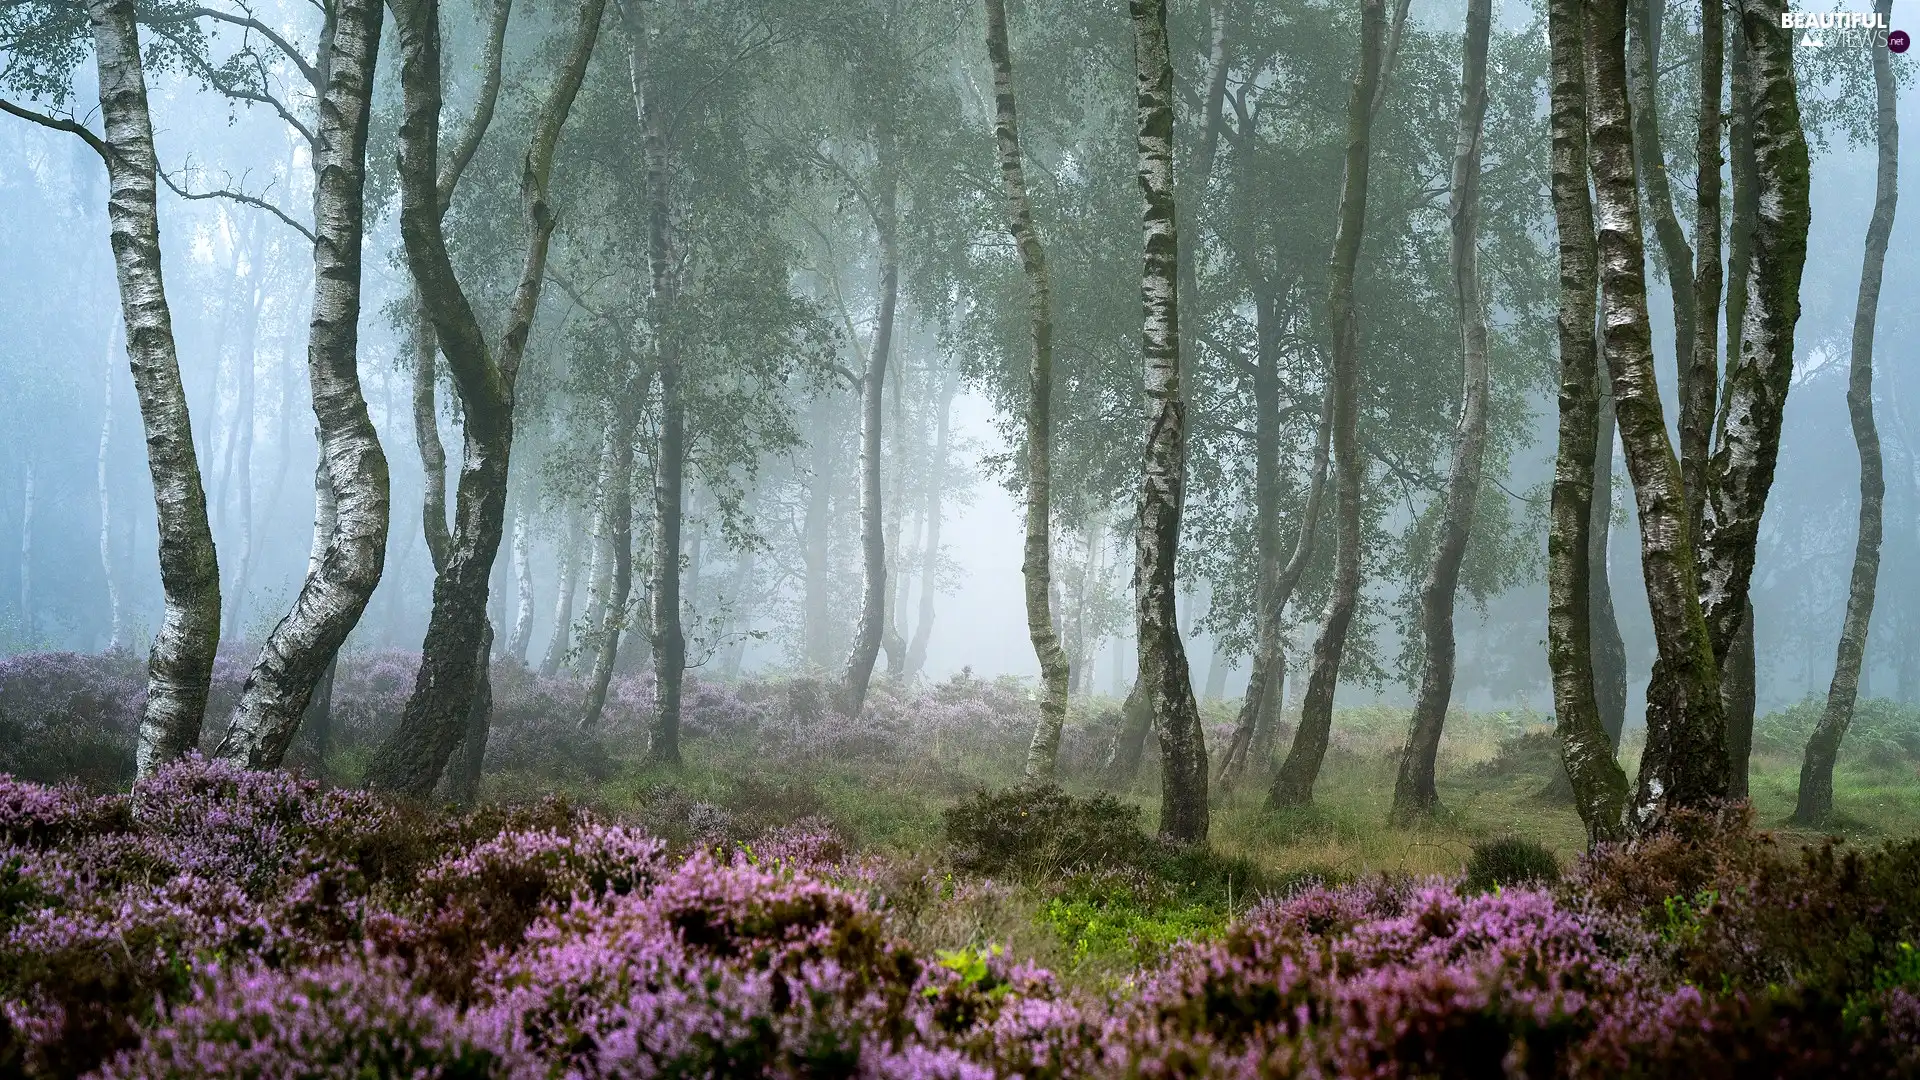 heath, viewes, birch, County Derbyshire, Fog, trees, forest, England, Peak District National Park, heathers